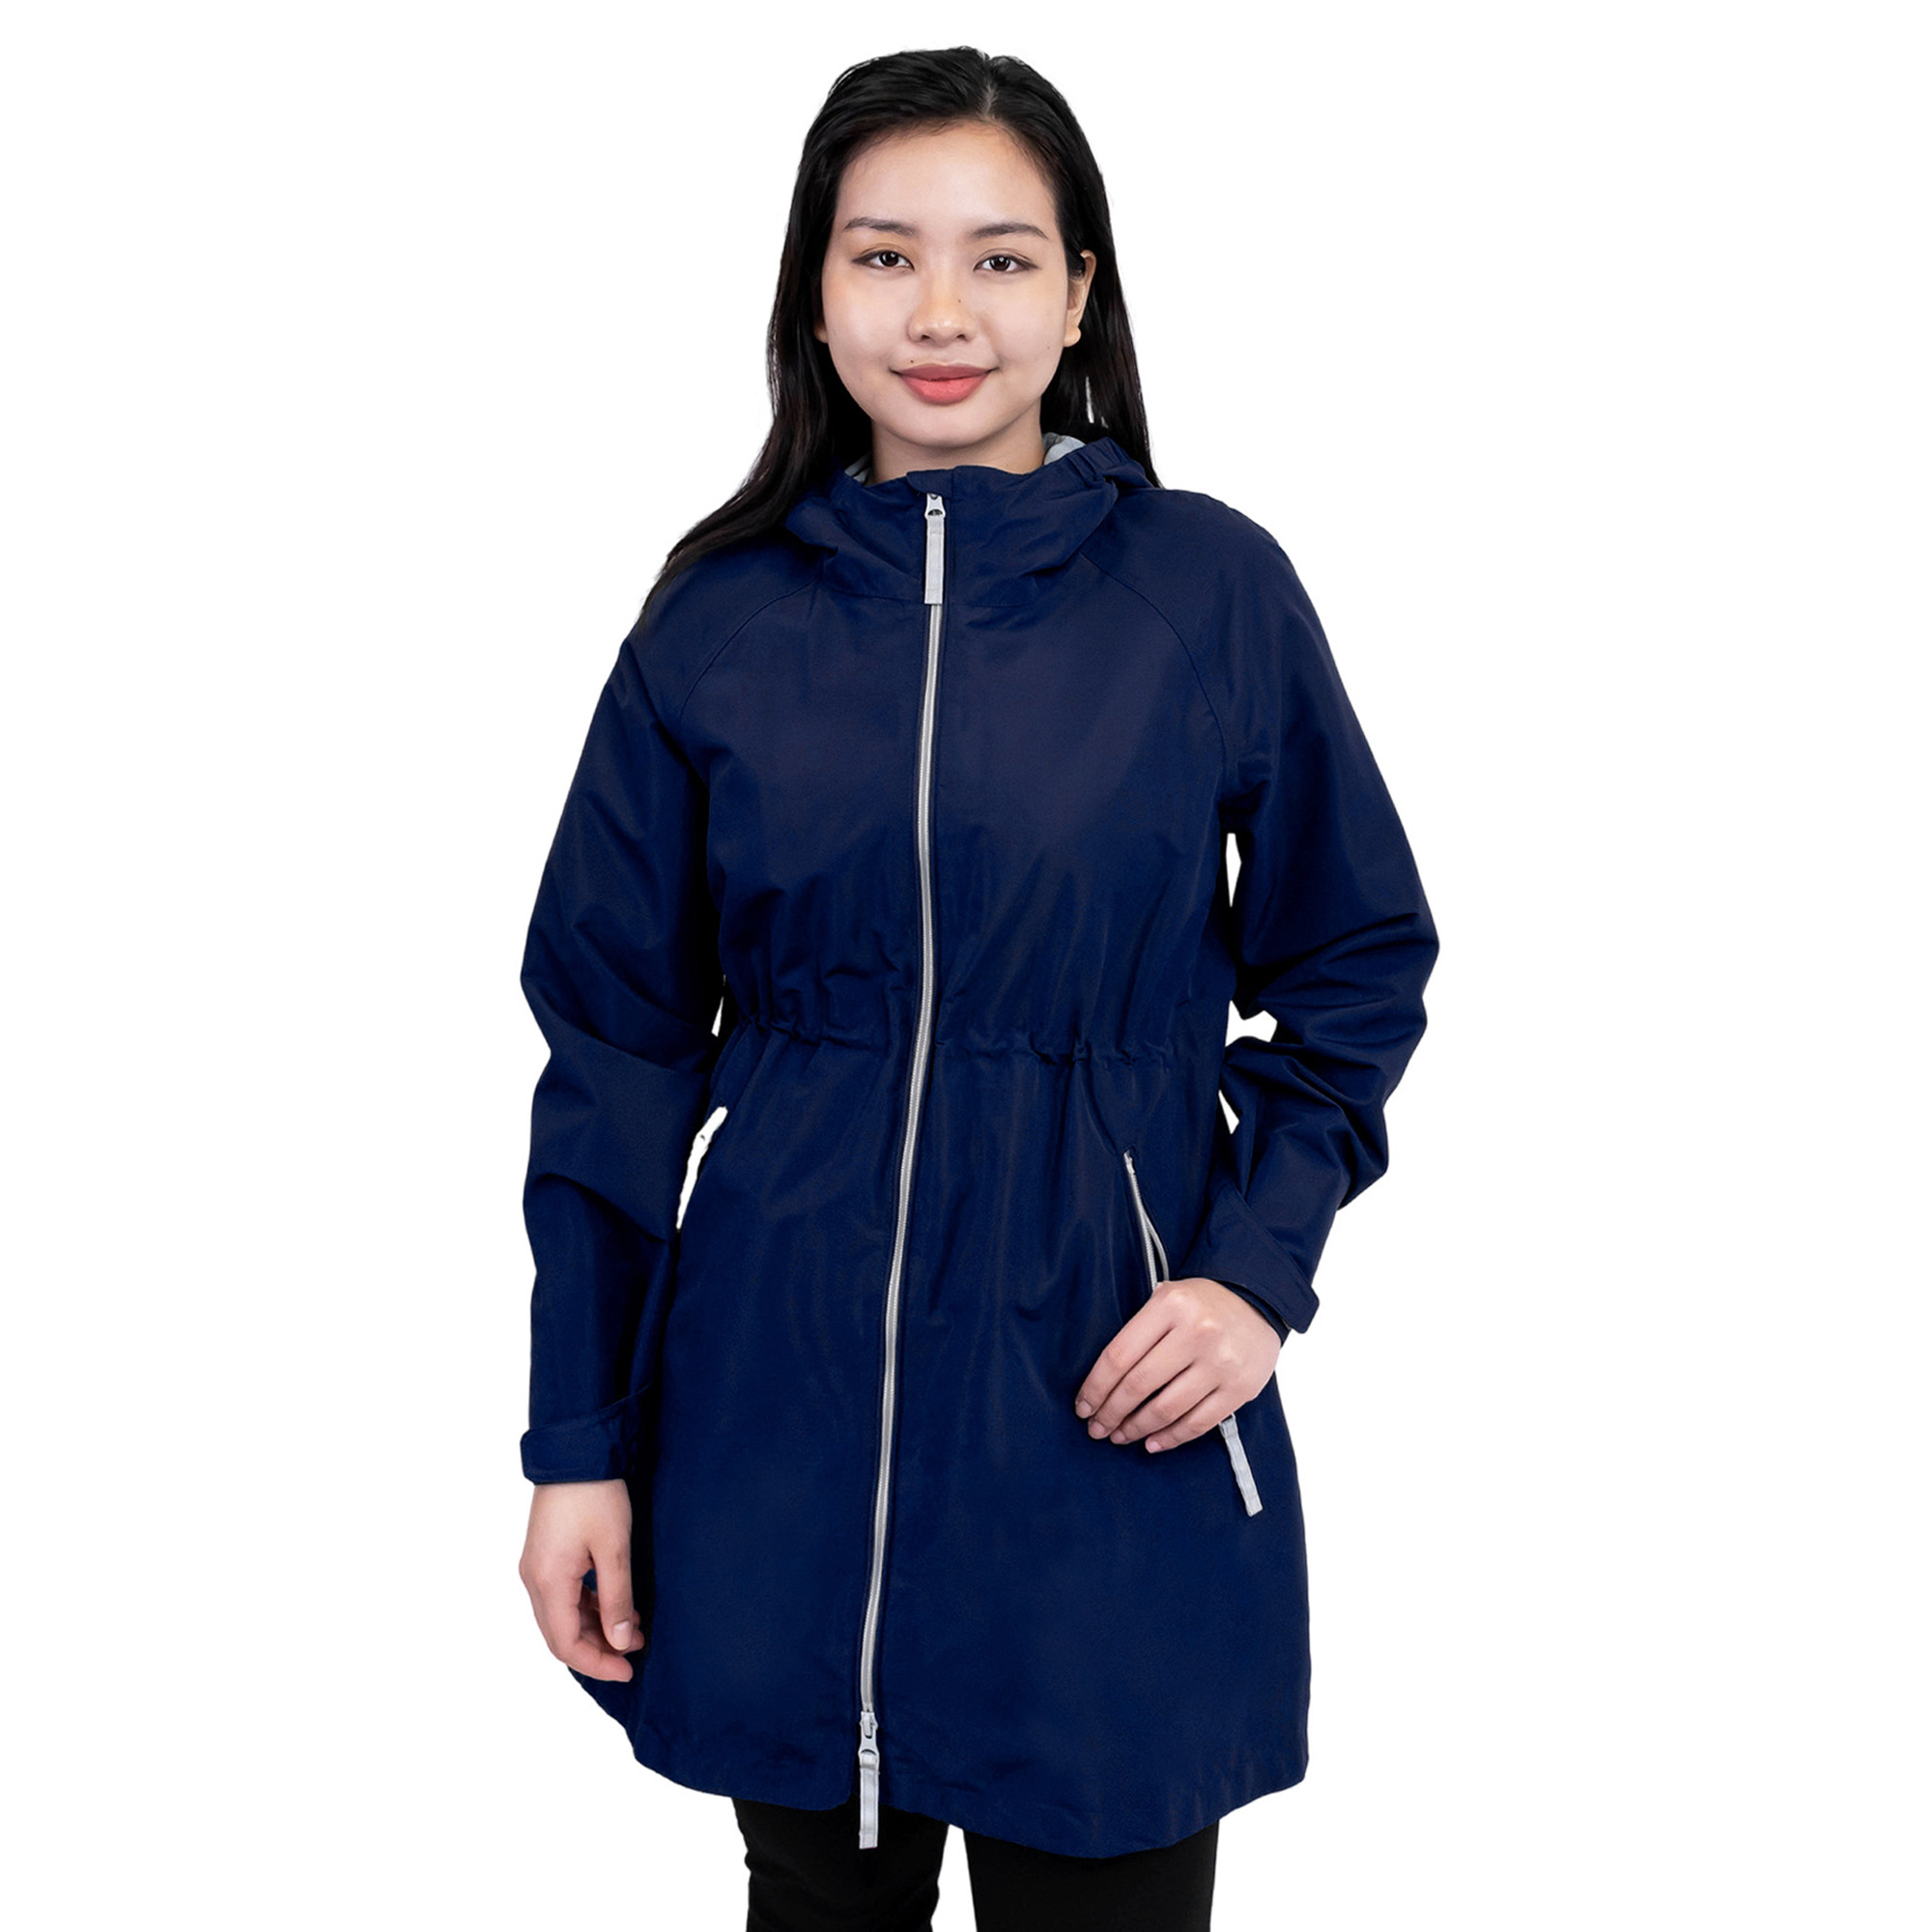 Womens Adjustable Rain Jackets | Navy Raincoat | Jan & Jul